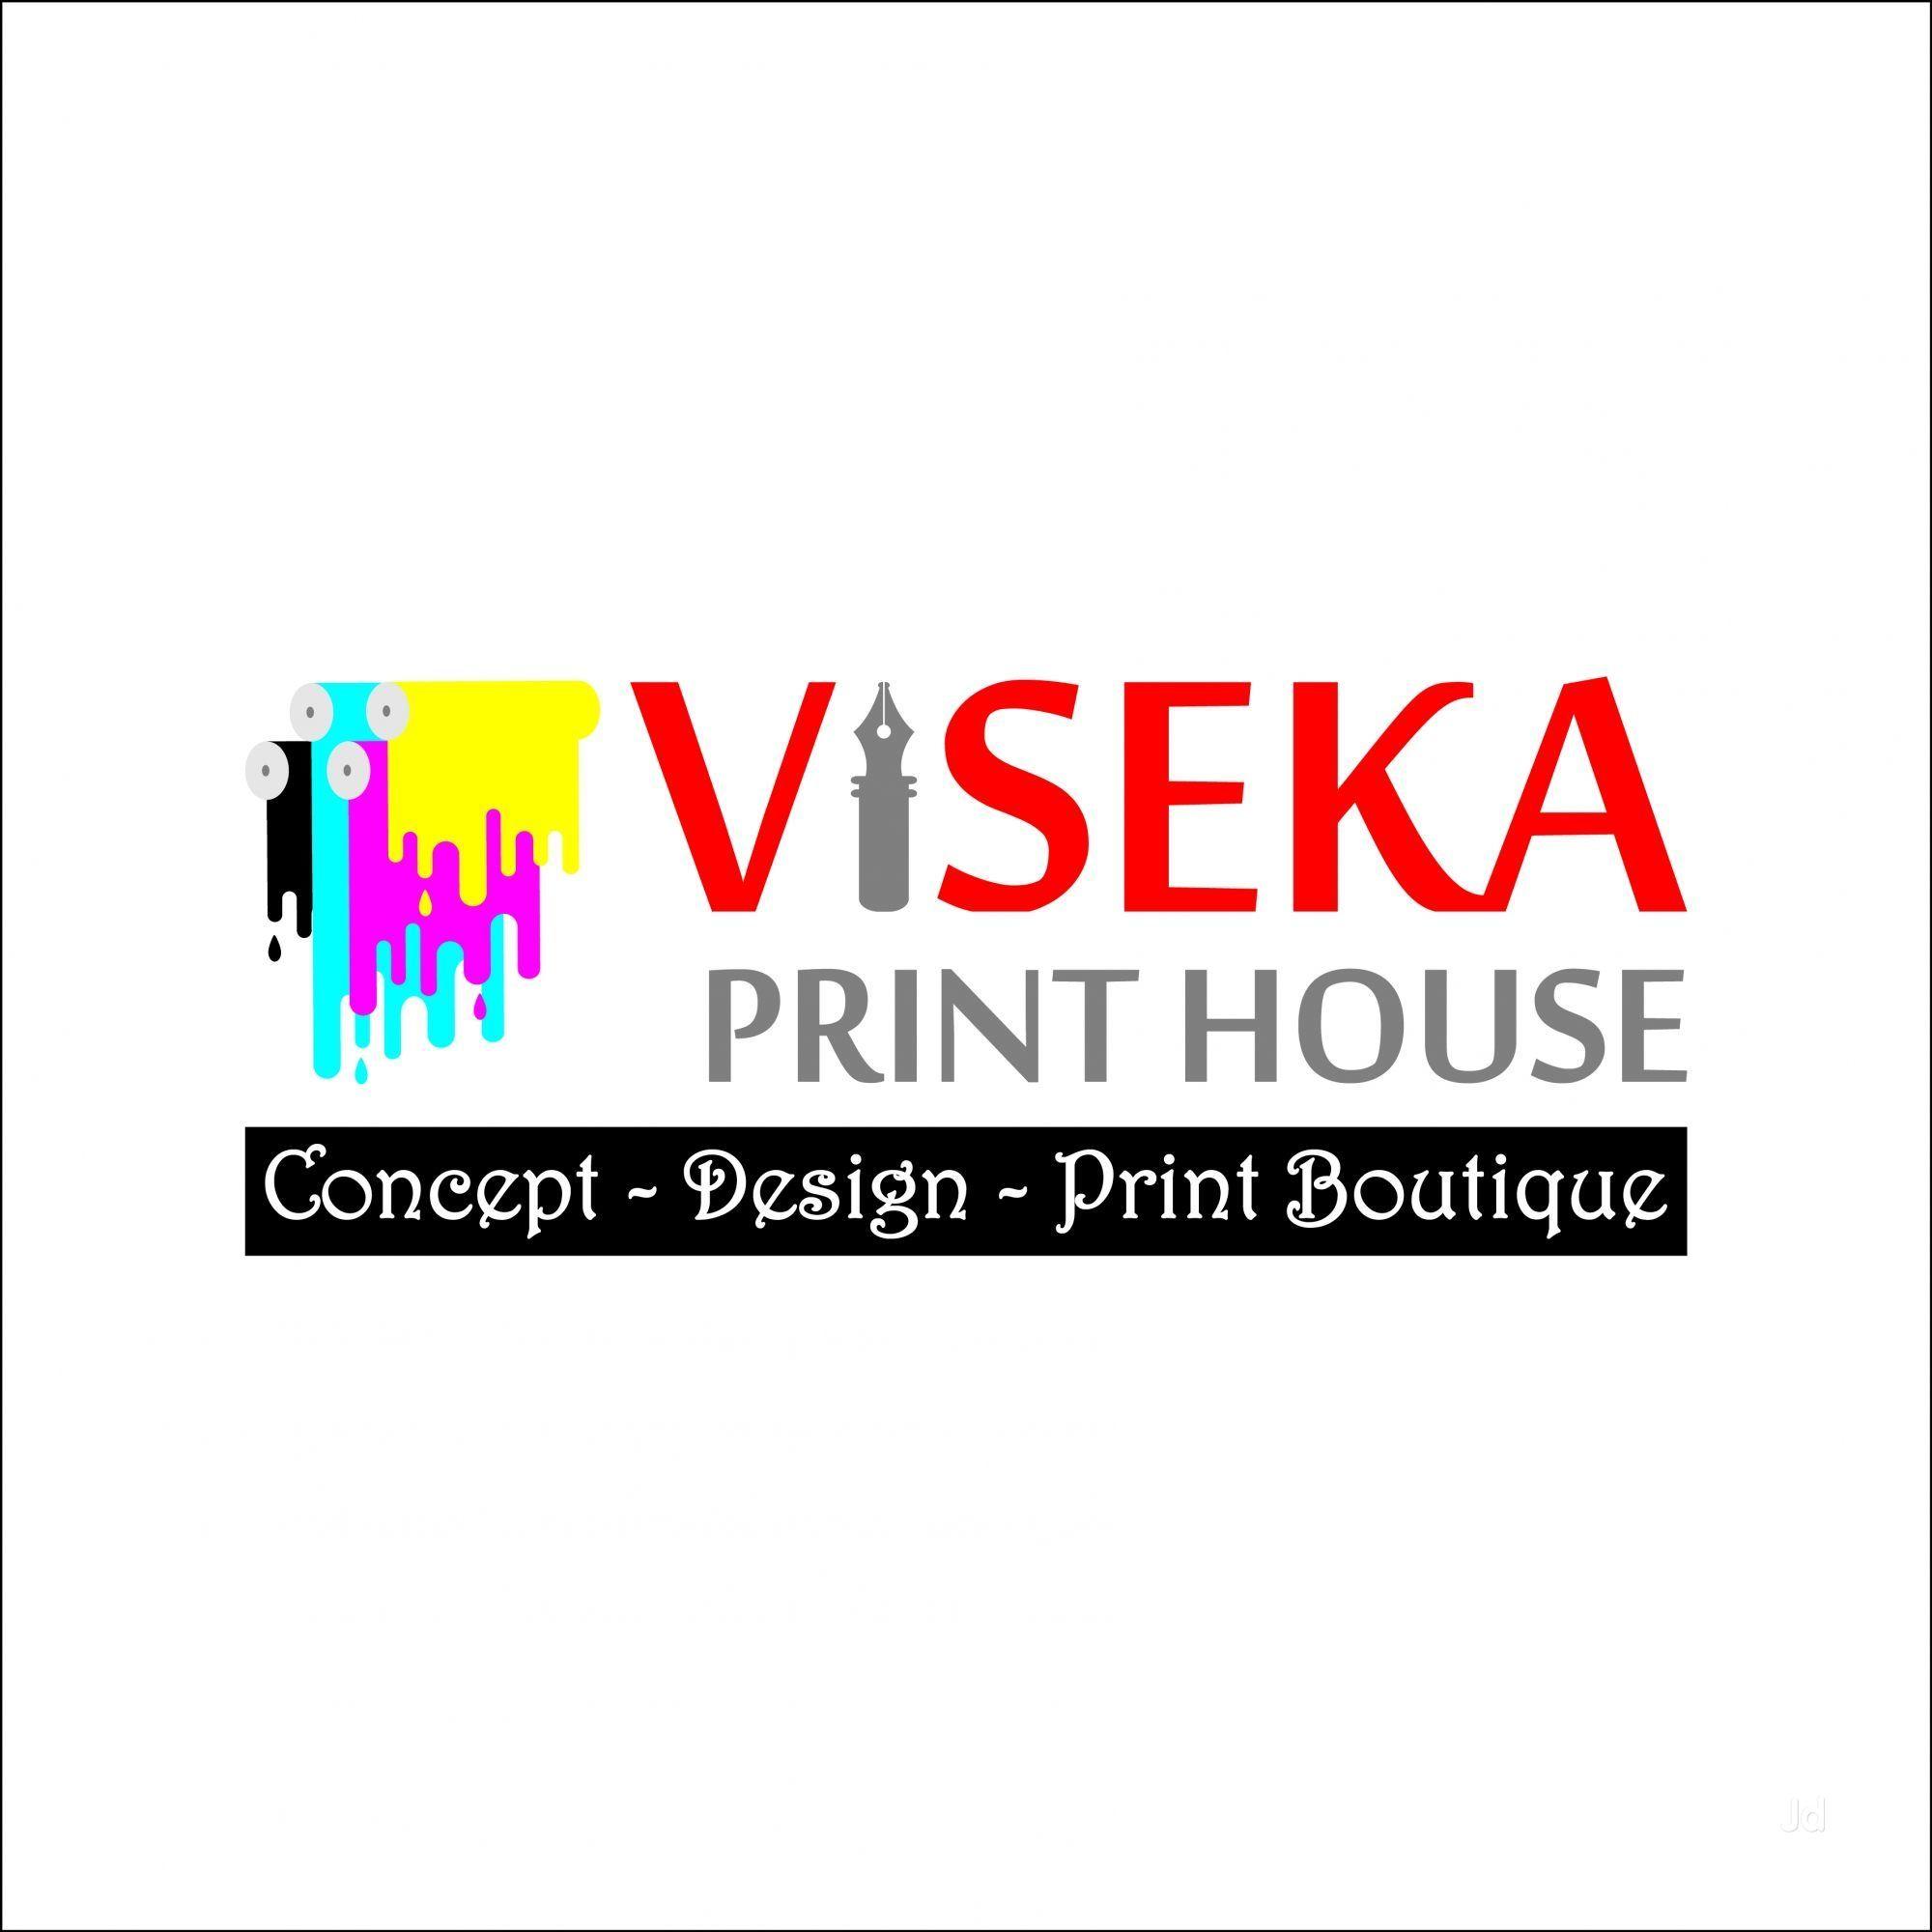 Printing House Logo - Viseka Print House Photos, Sattur, Virudhunagar- Pictures & Images ...